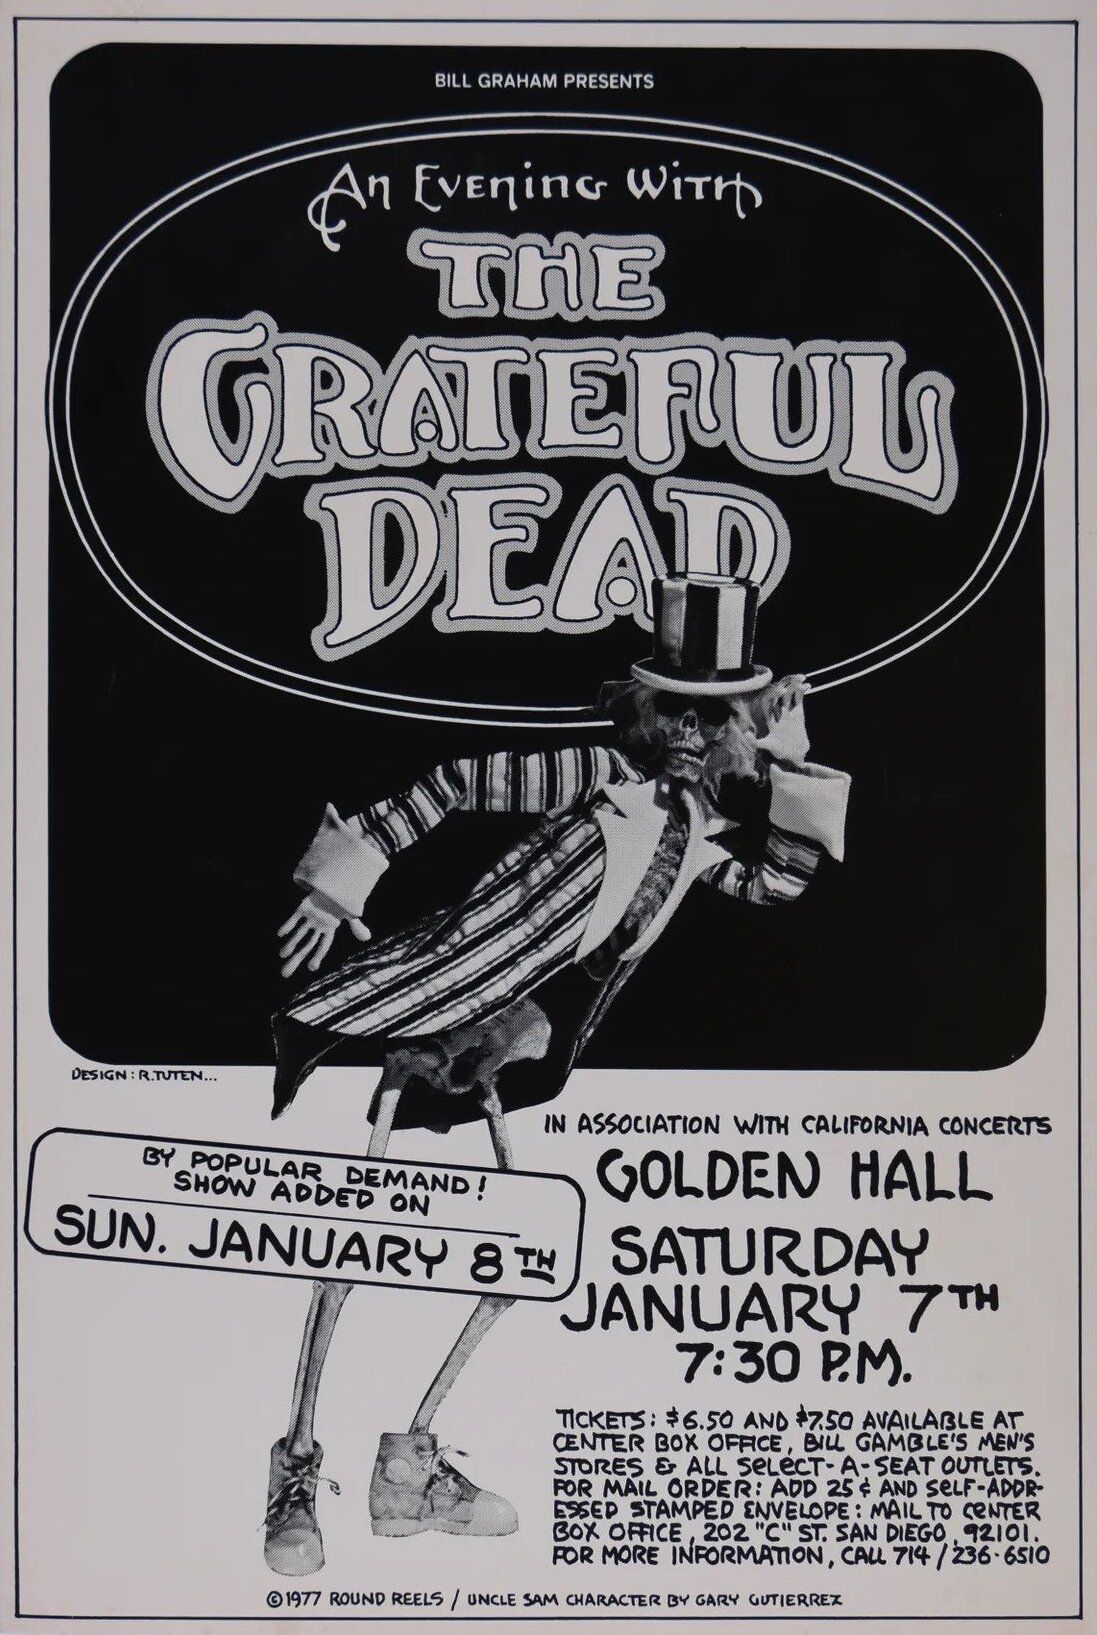 Grateful Dead Golden Hall 1978 Concert Poster